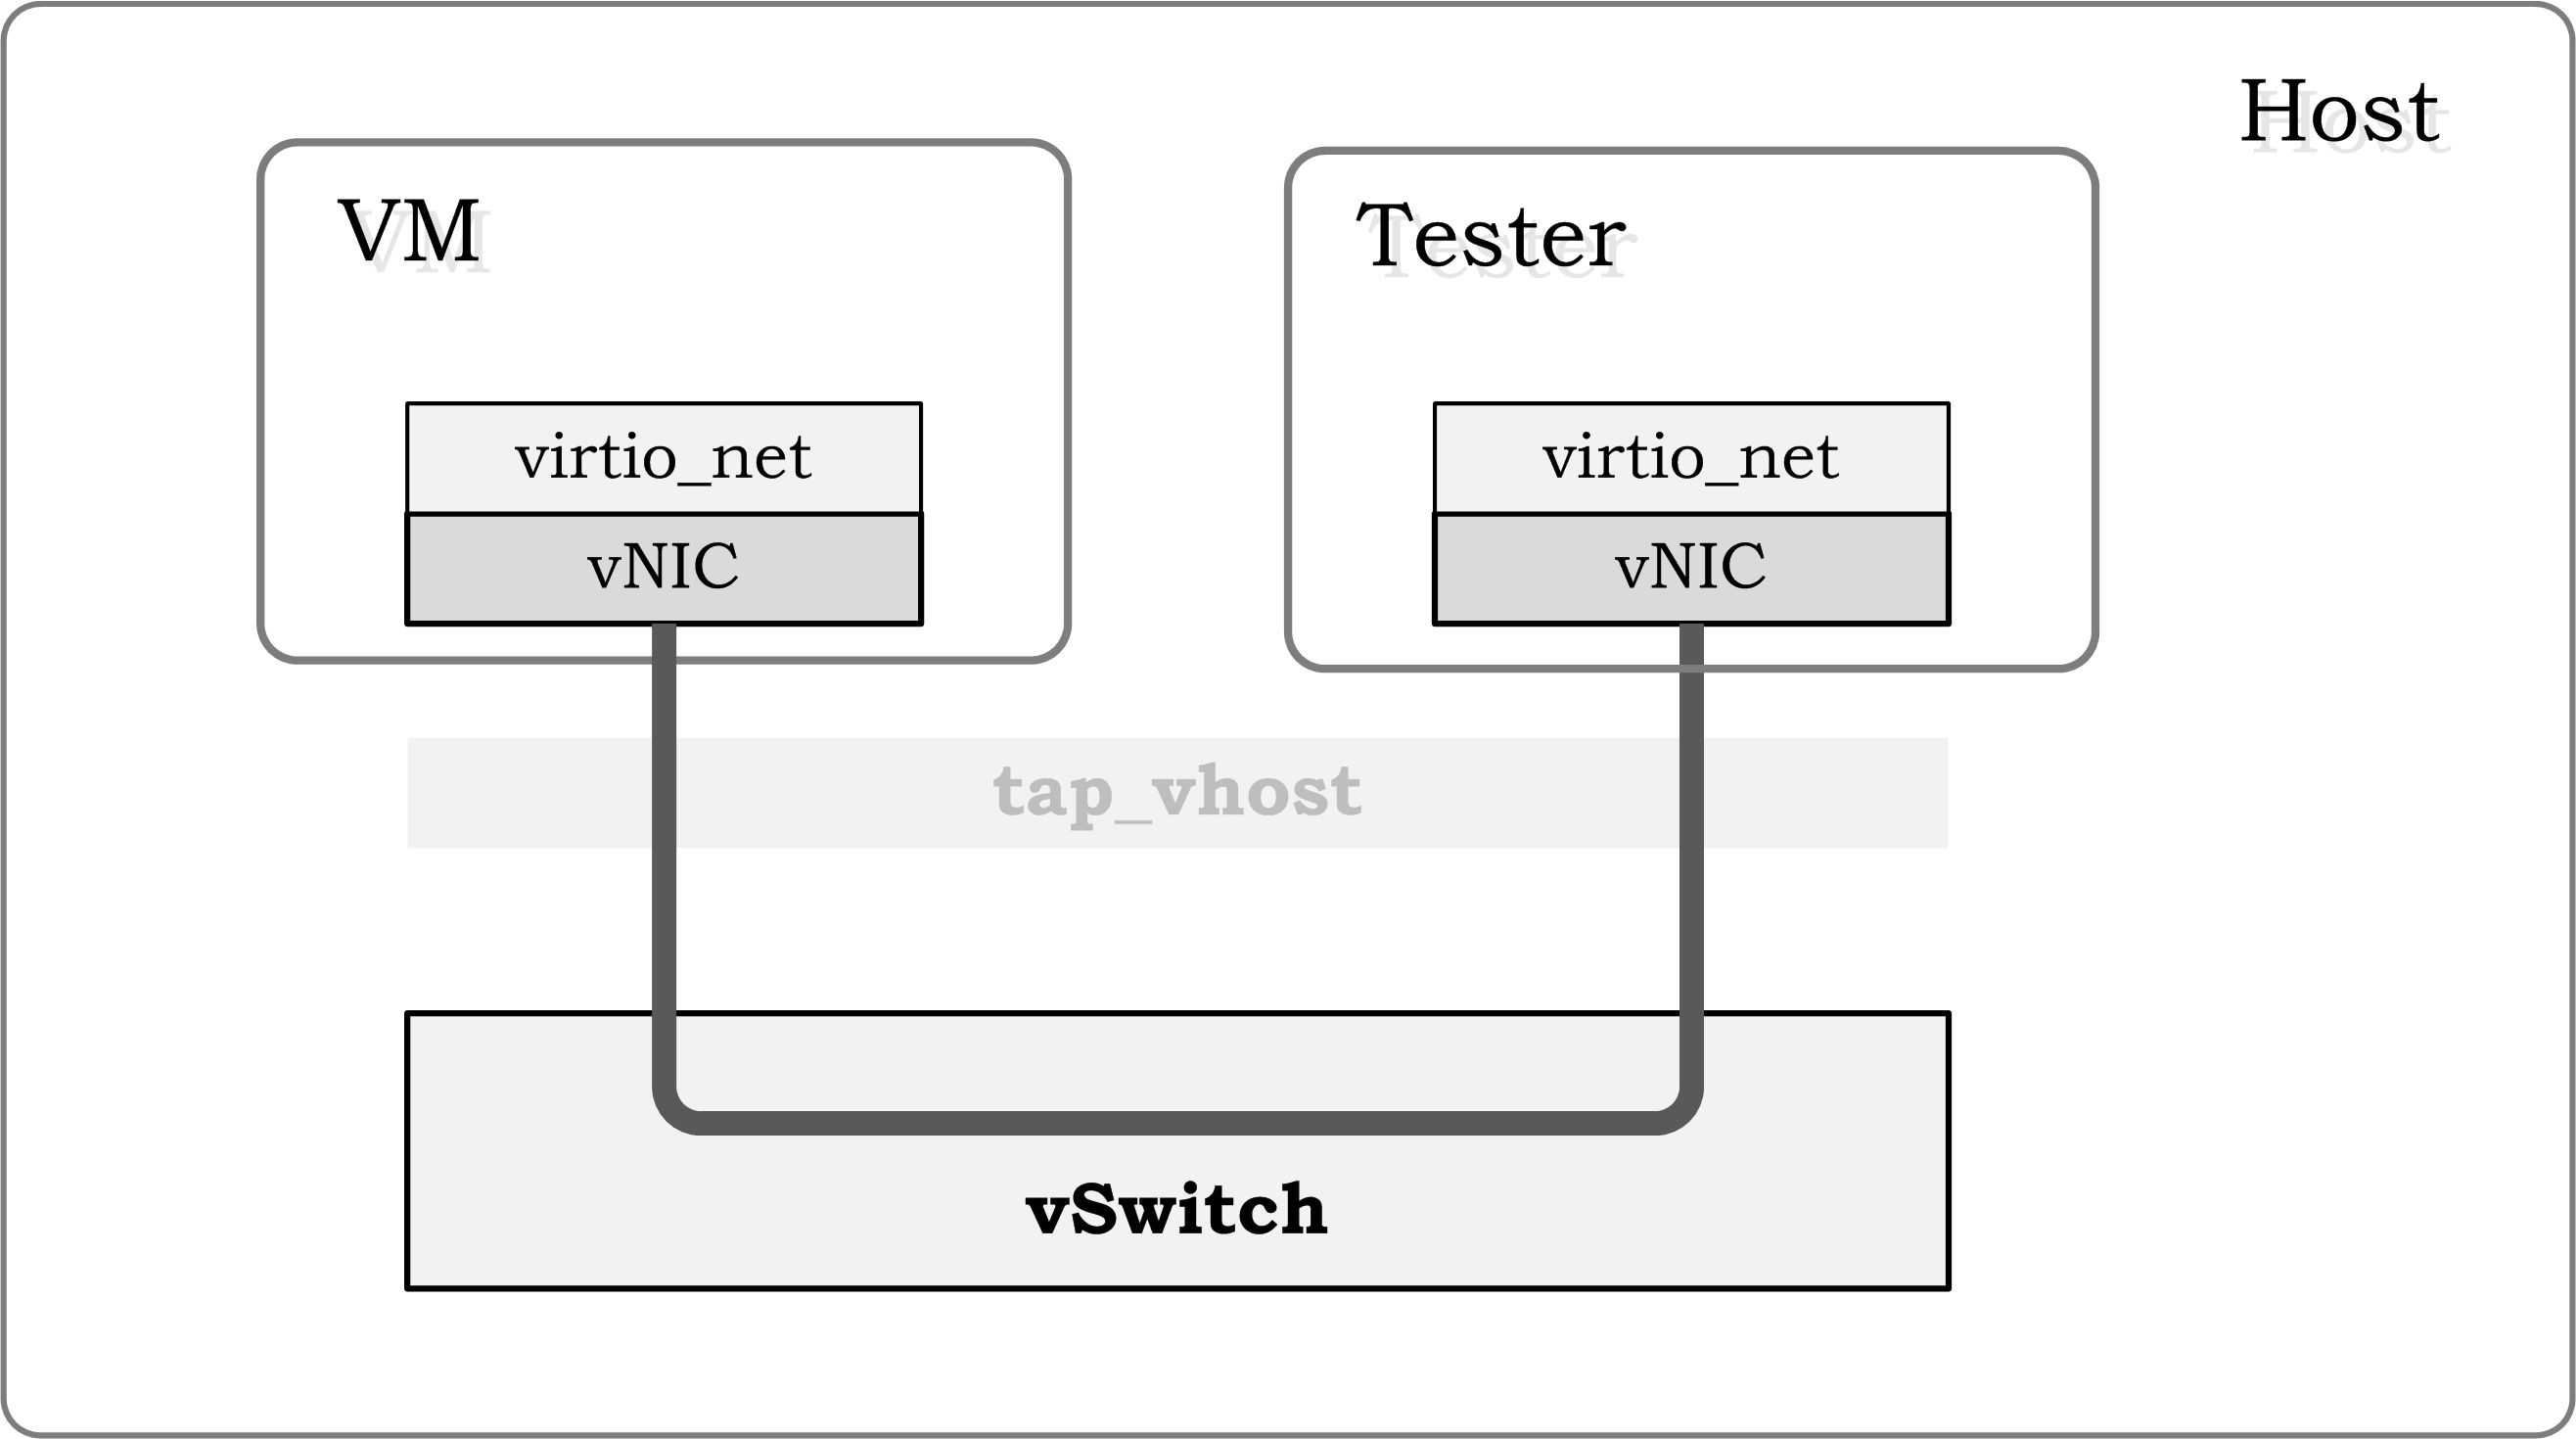 testsuites/vstf/vstf_scripts/vstf/controller/res/deployment/Tu.gif